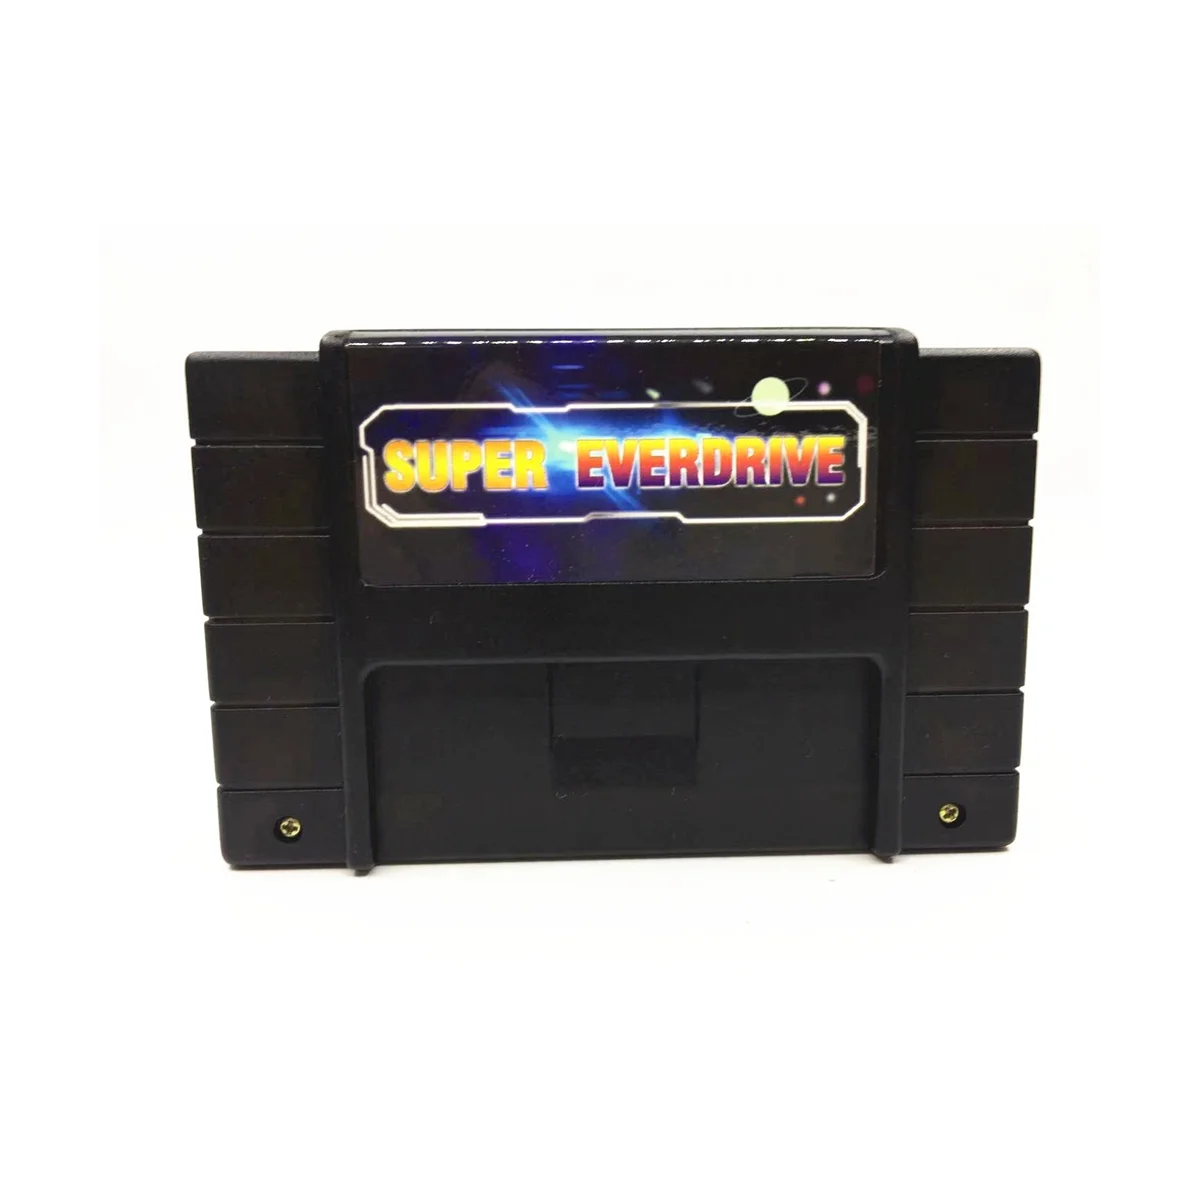 

Super 800 in 1 Pro Remix Game Card For SNES 16 Bit Video Game Console Super EverDrive Cartridge, Black